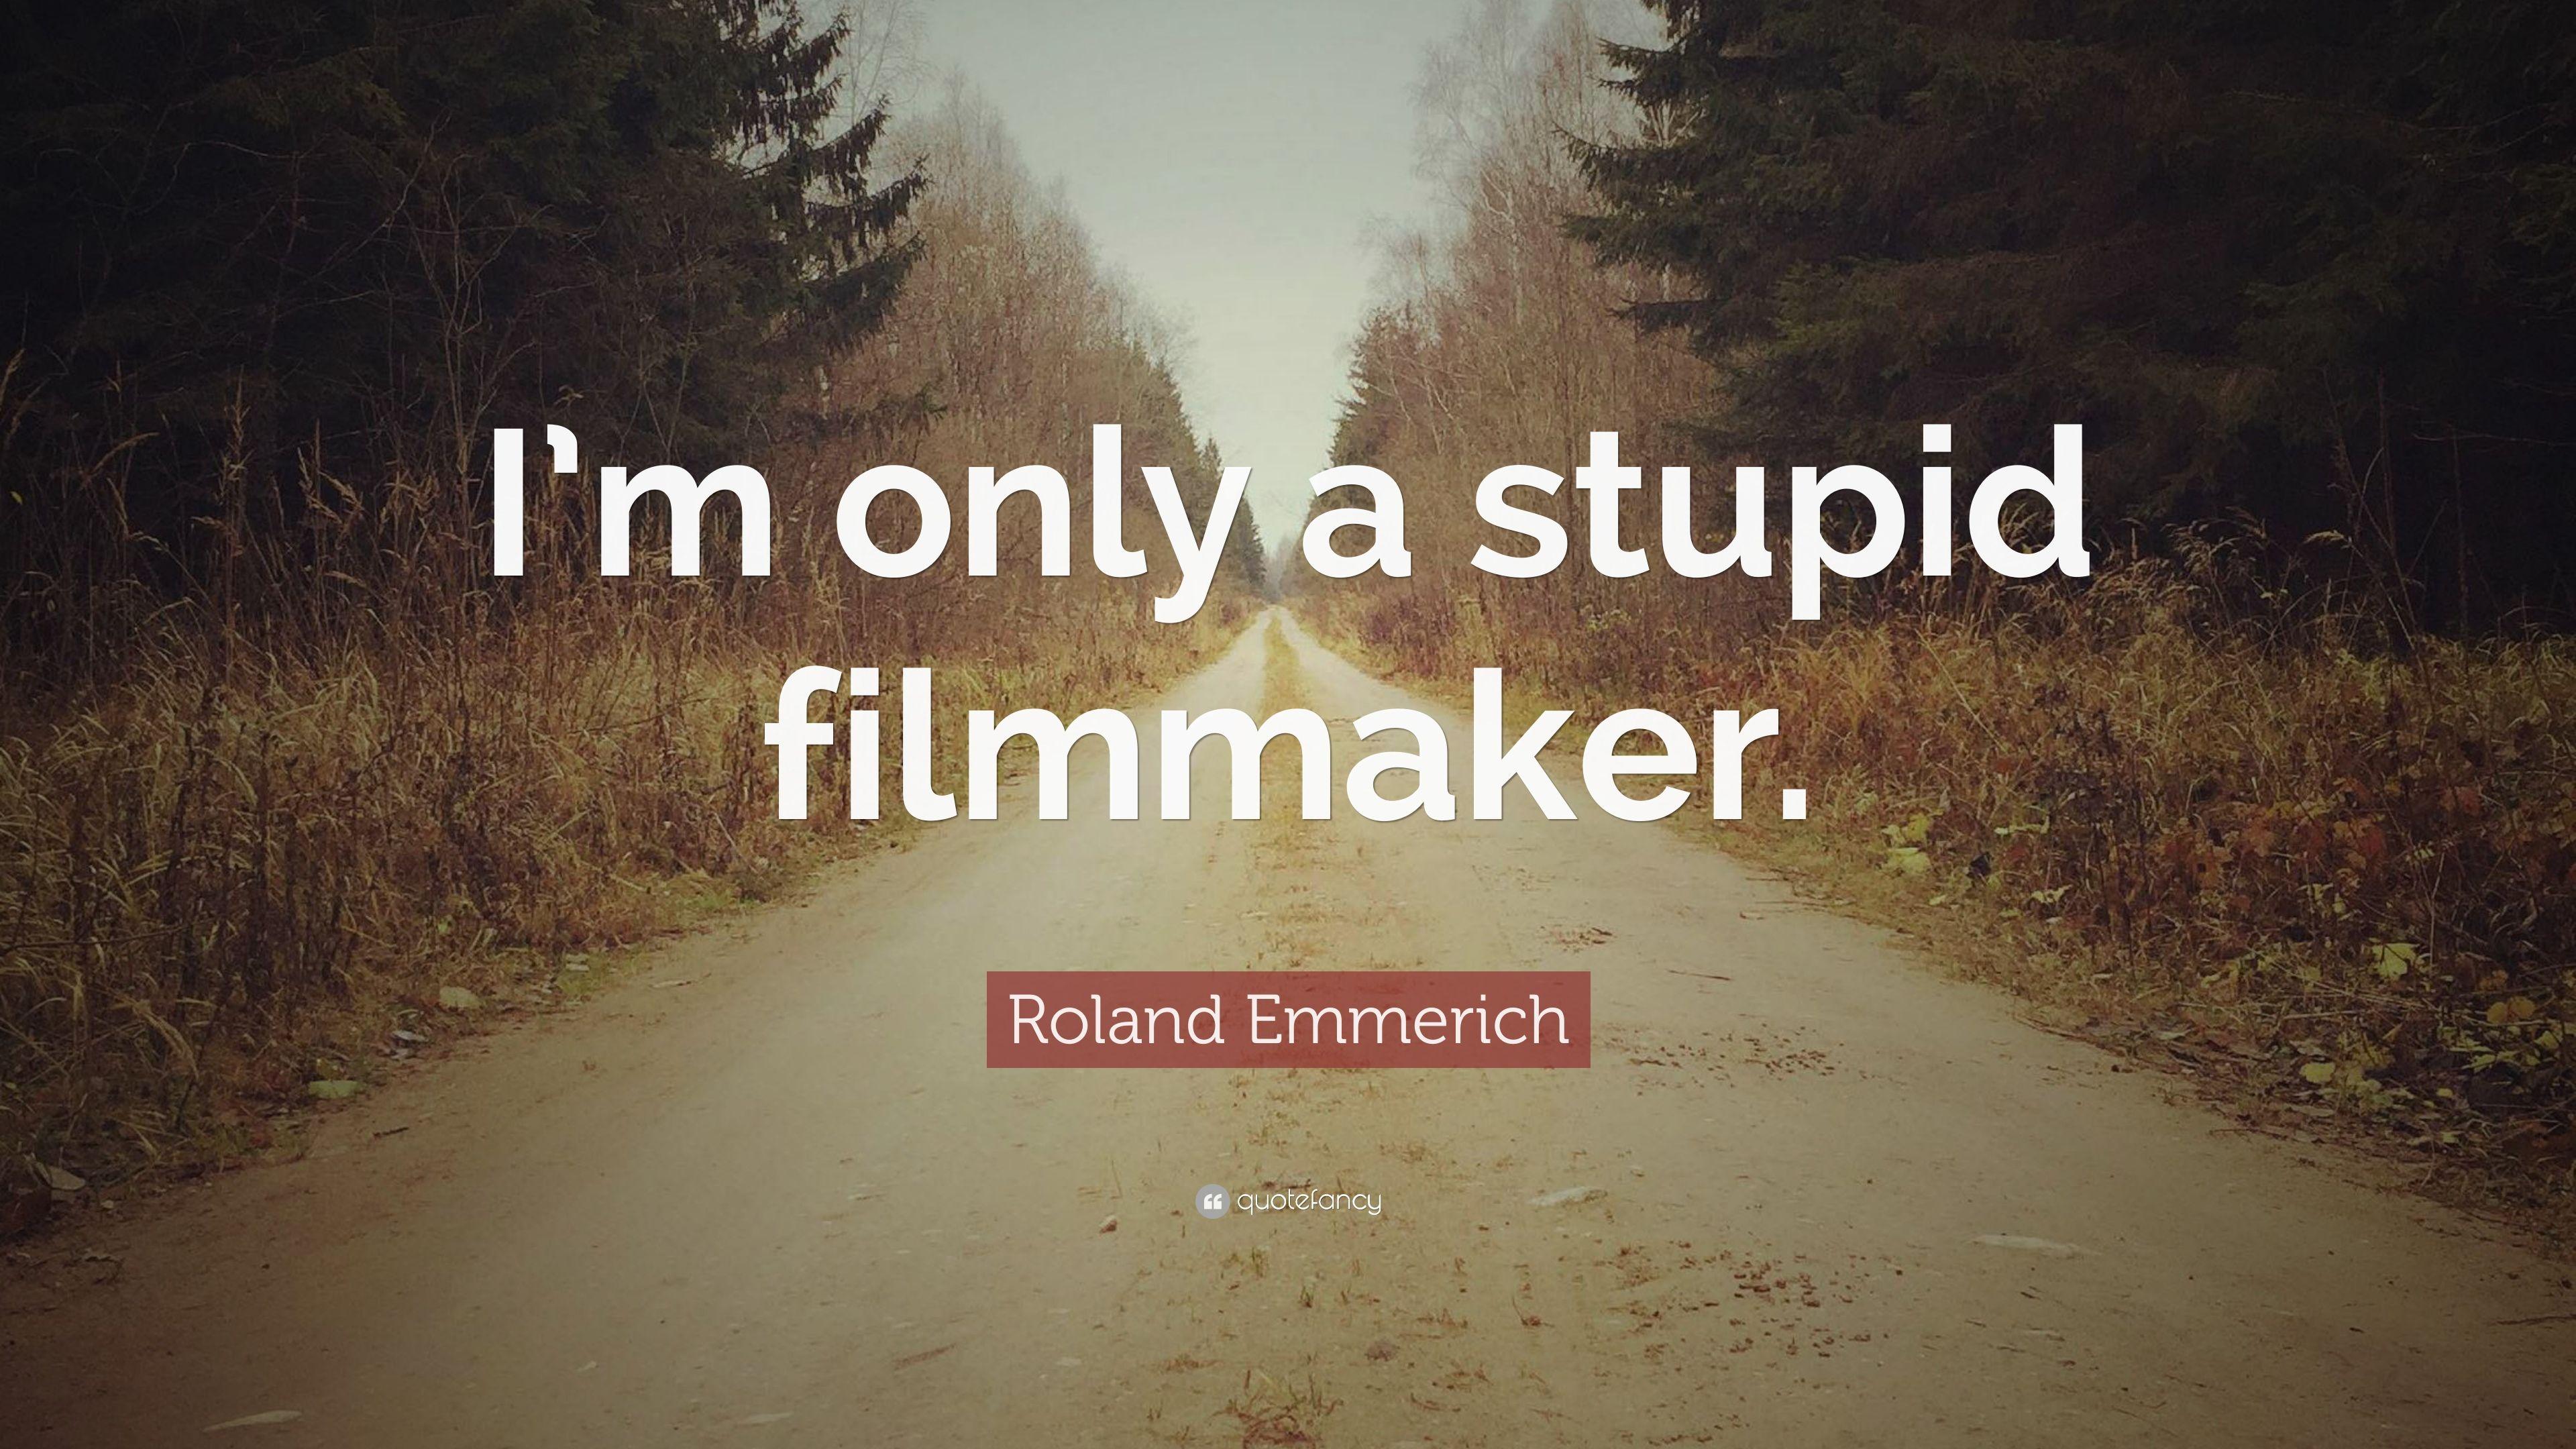 Roland Emmerich Quote: “I'm only a stupid filmmaker.” 10 wallpaper Quotefancy Movie, Film, Cinema, Drama quotes